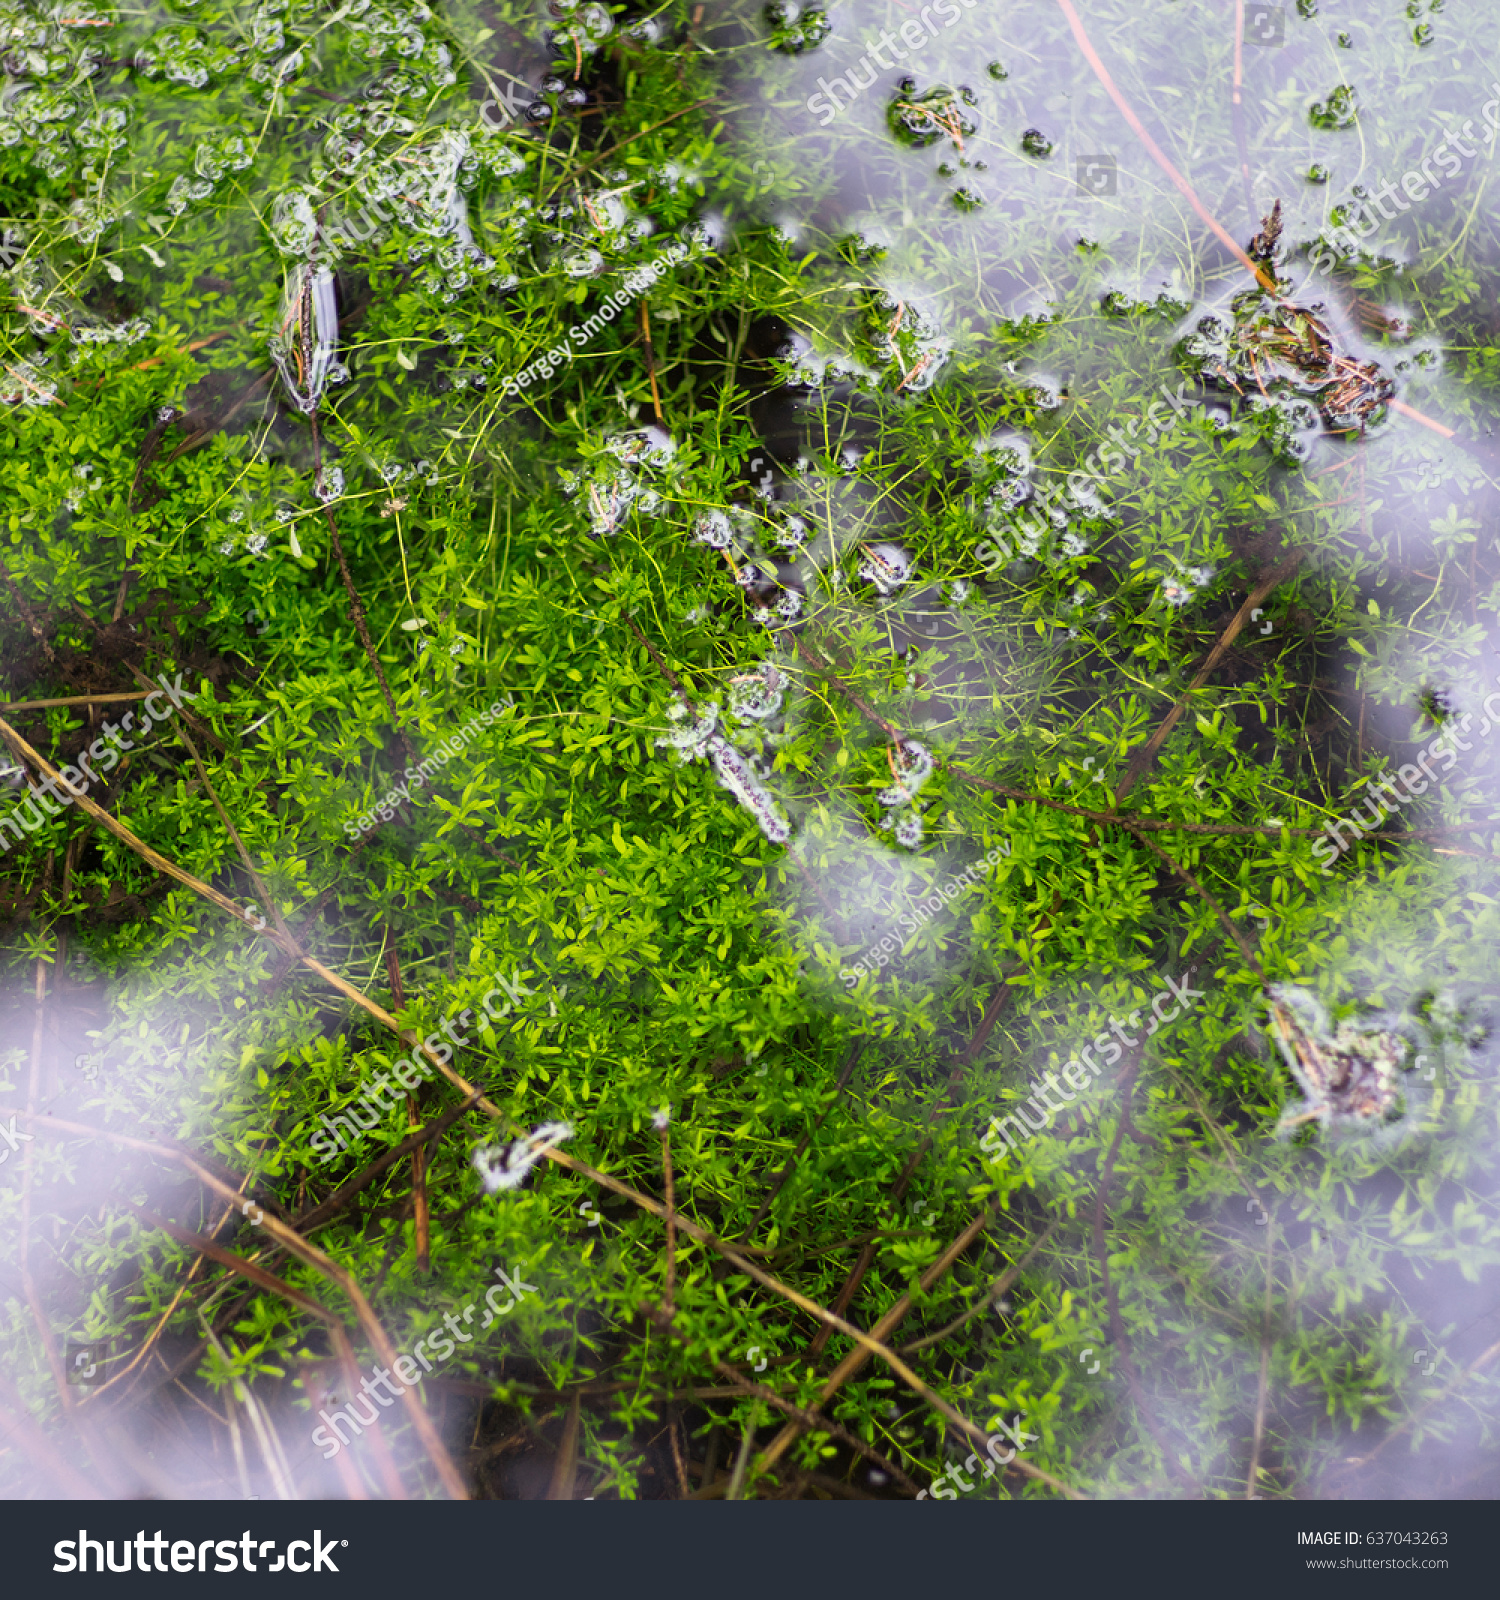 Green Seaweed Icebound Nature Background Stock Photo & Image ...